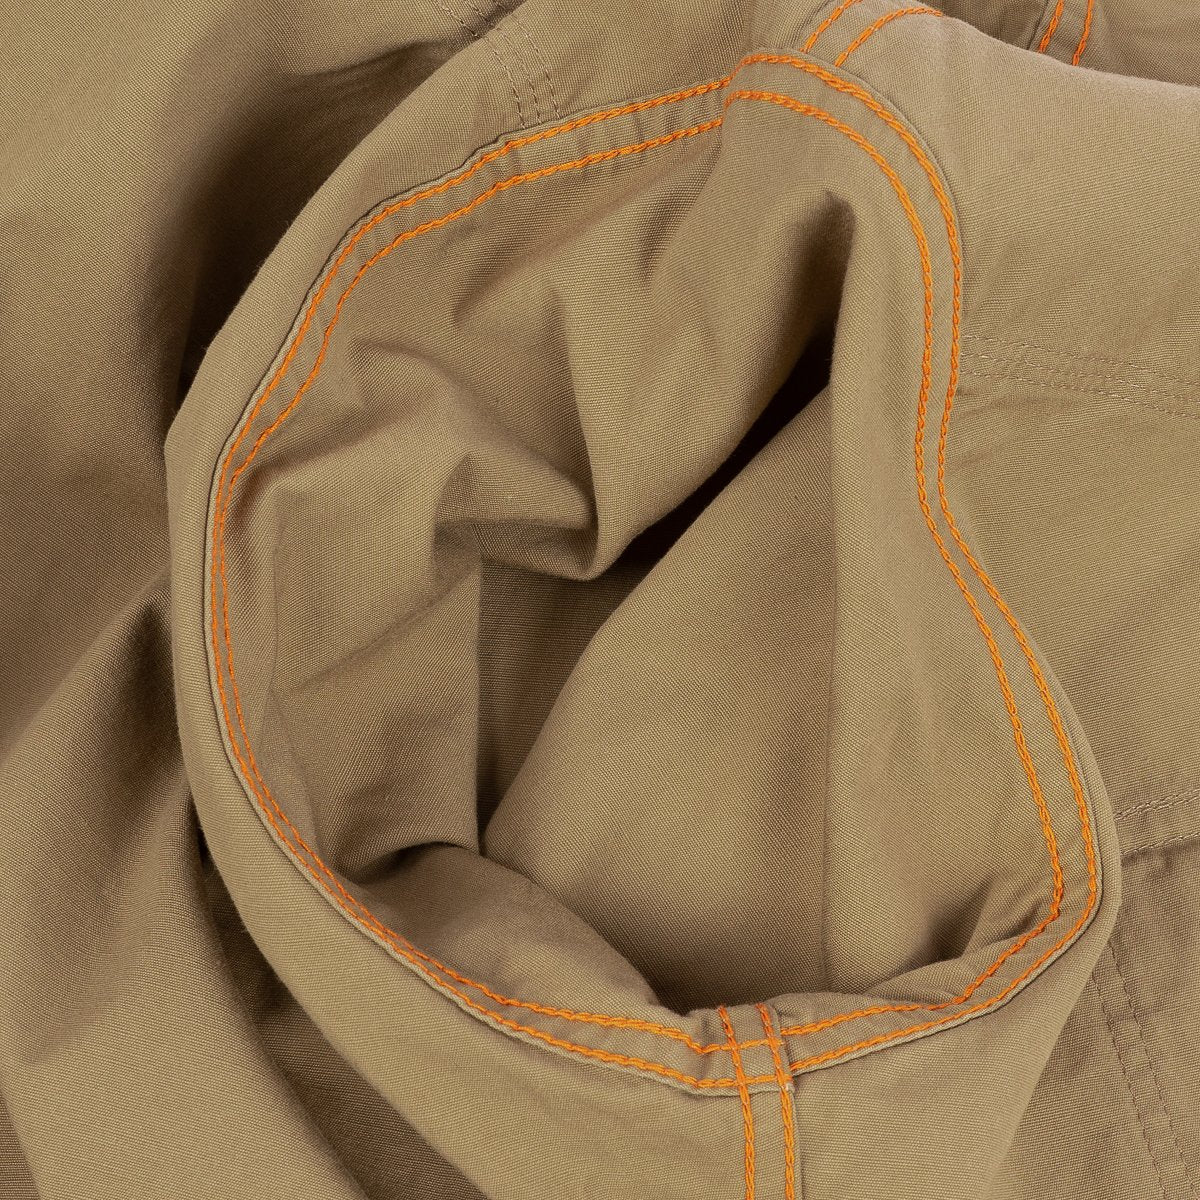 IHSH-394-KHA 7oz Fatigue Cloth Western Shirt Khaki